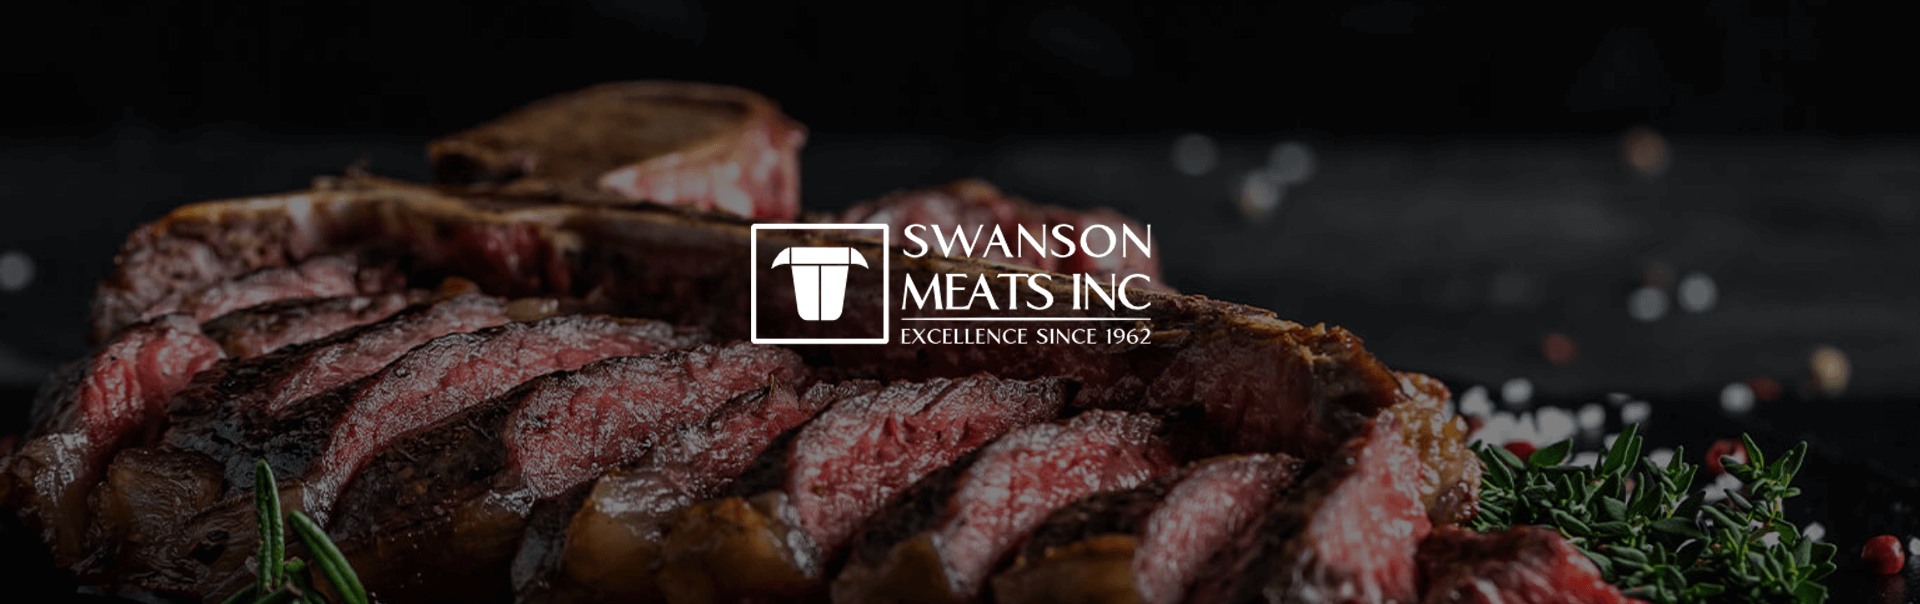 Swanson Meats Website Design